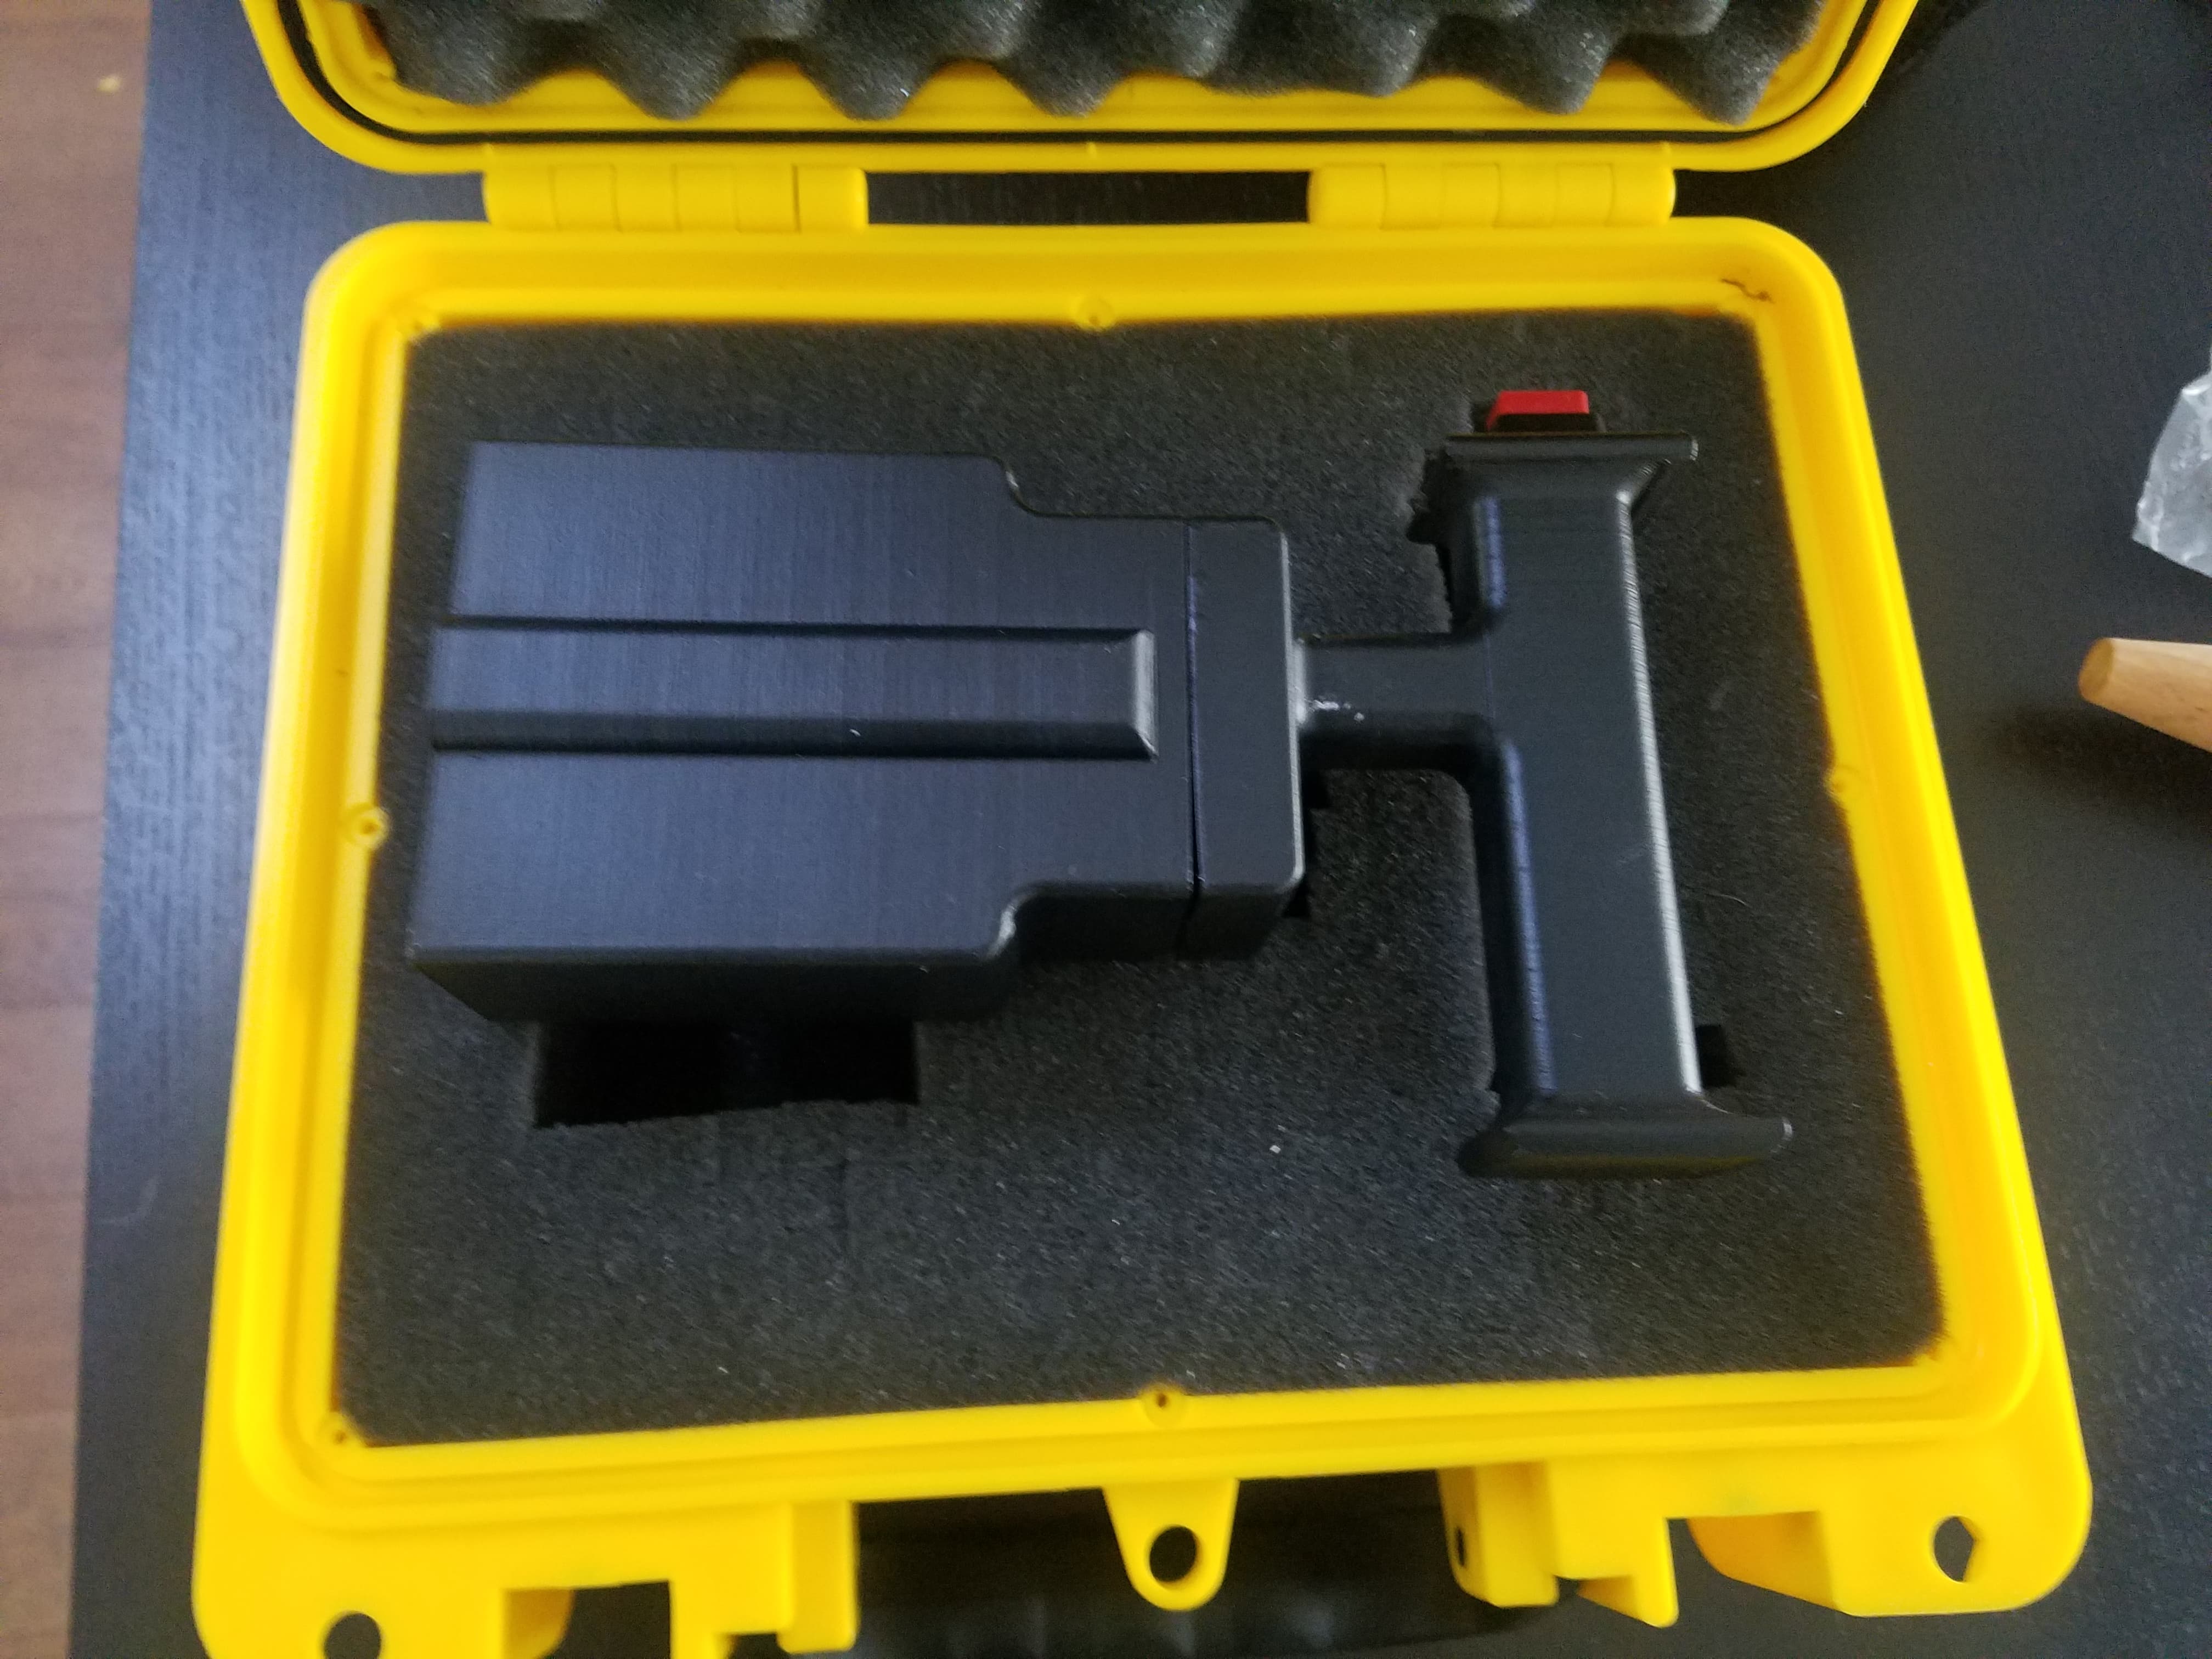 The Grapple Gun Assembled in Case